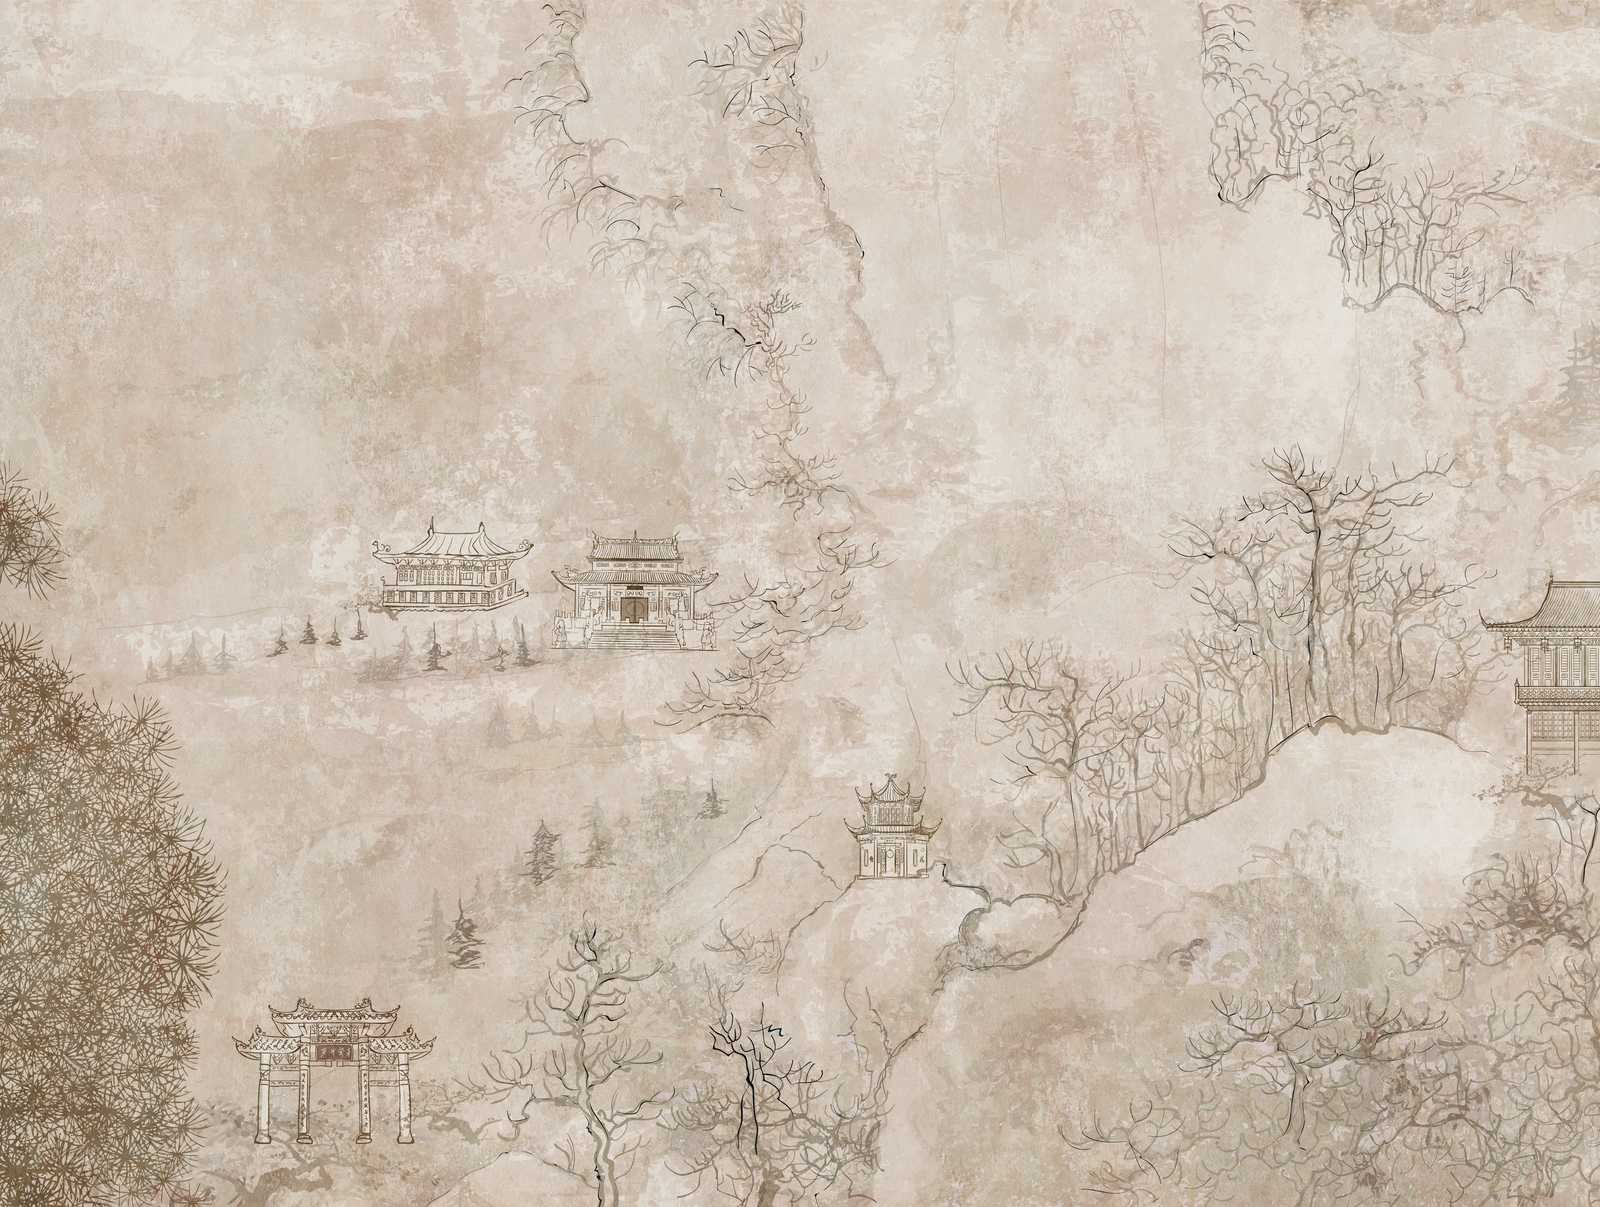             Wallpaper novelty - motif wallpaper Asia retro design with landscape and pagodas
        